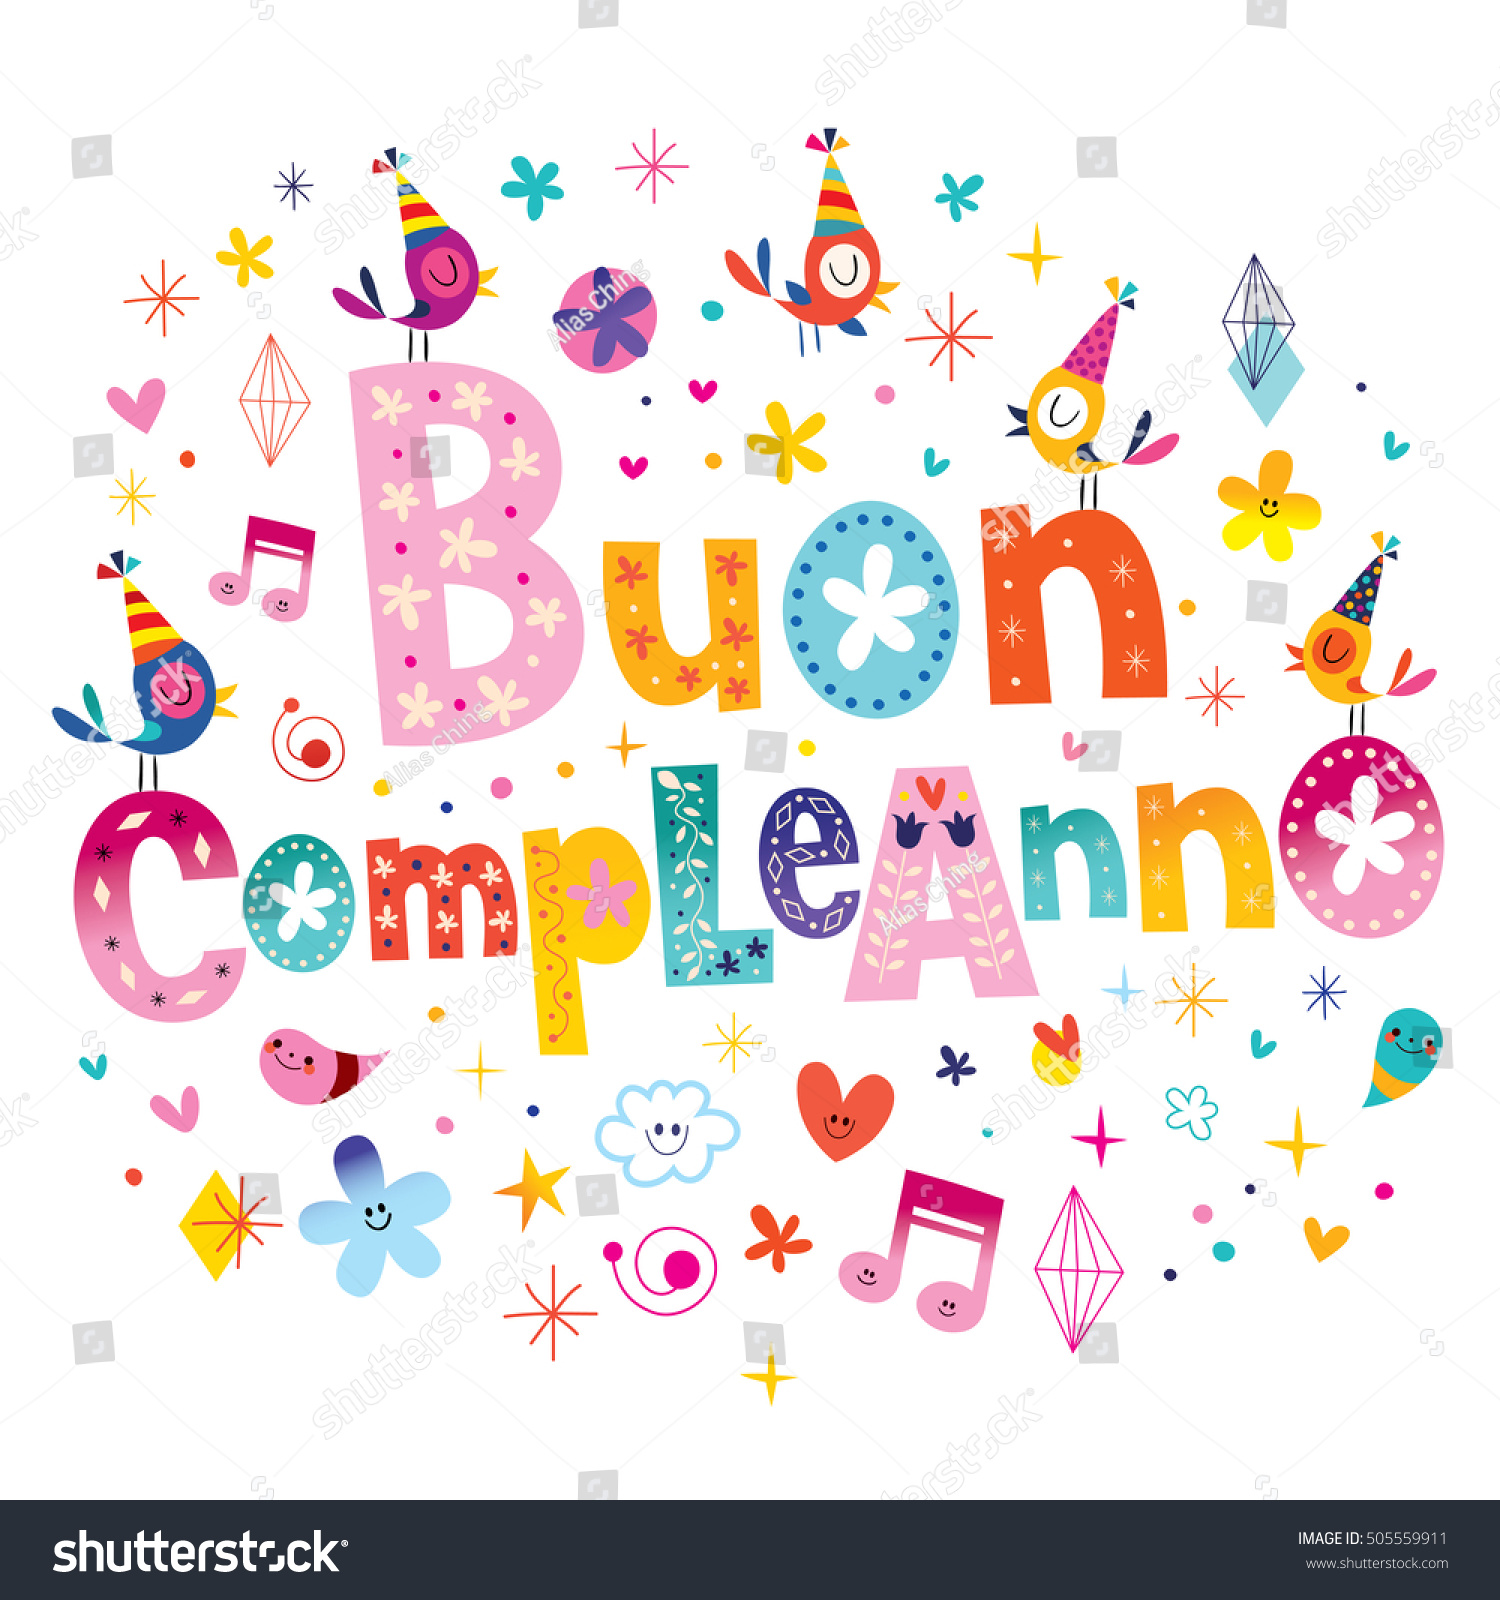 Buon Compleanno Happy Birthday Italian Greeting Stock Vector Royalty Free